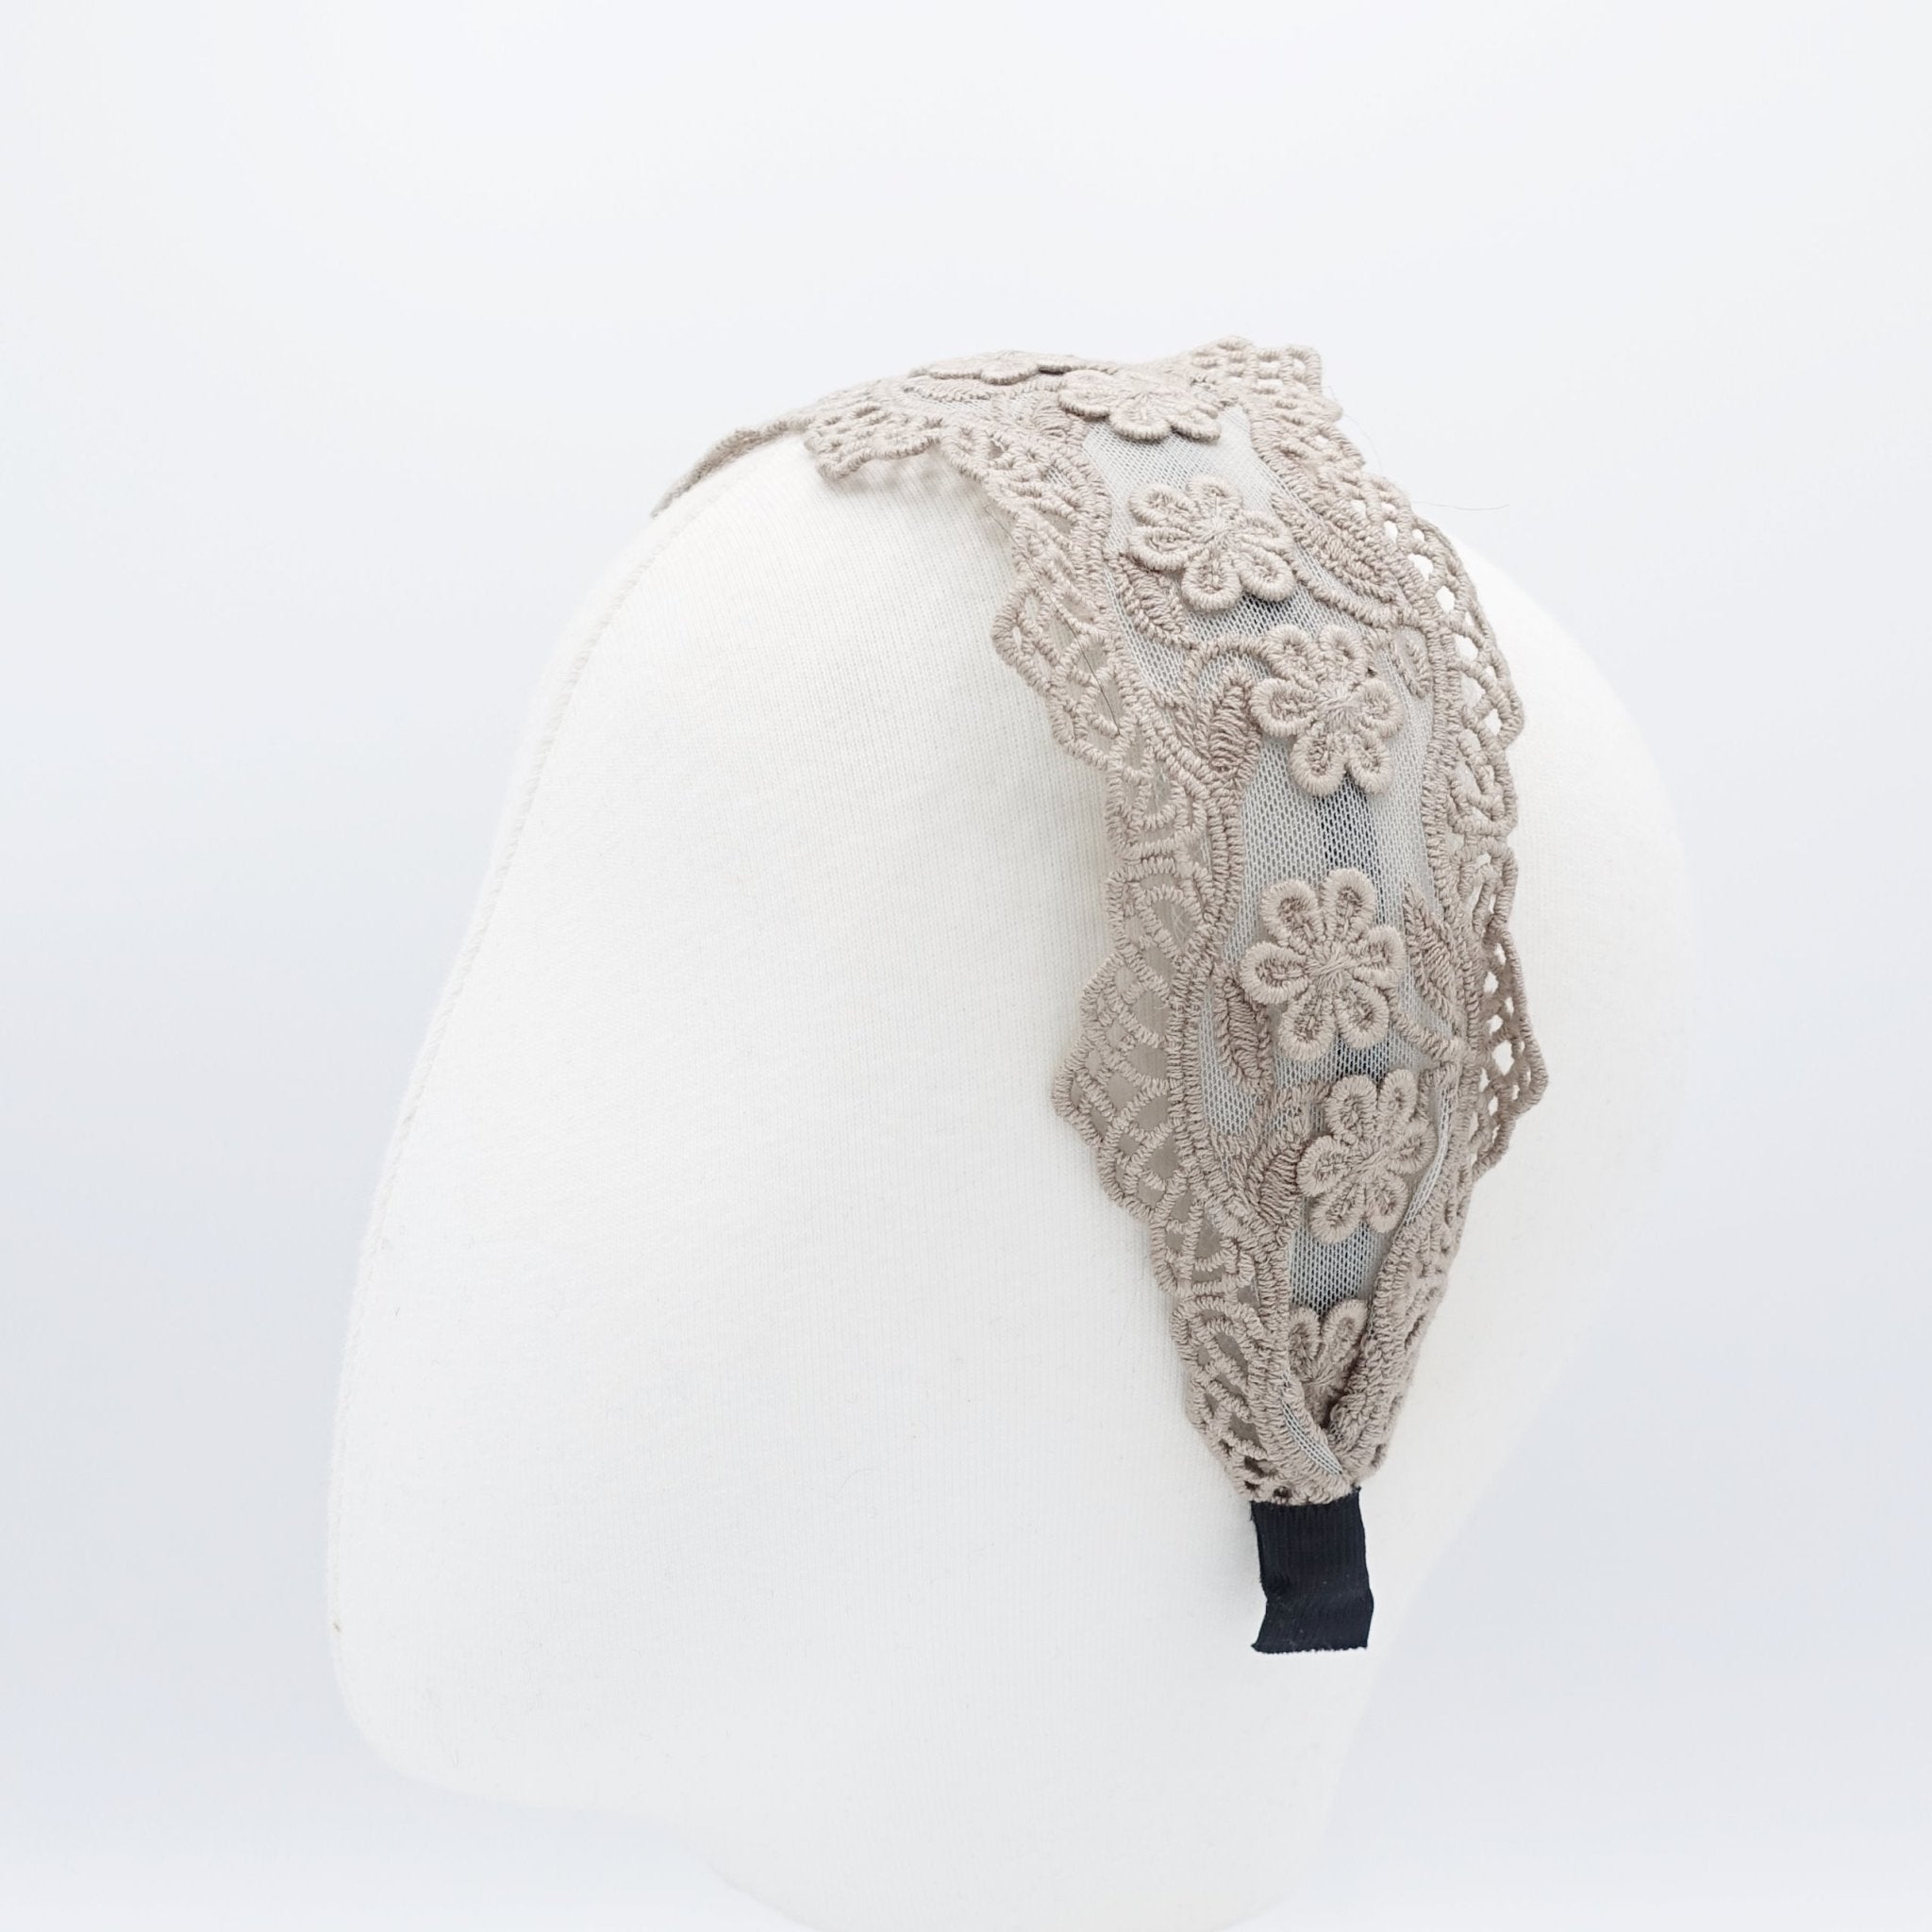 veryshine.com hairband/headband Beige floral lace headband flat headband elegant women hair accessory